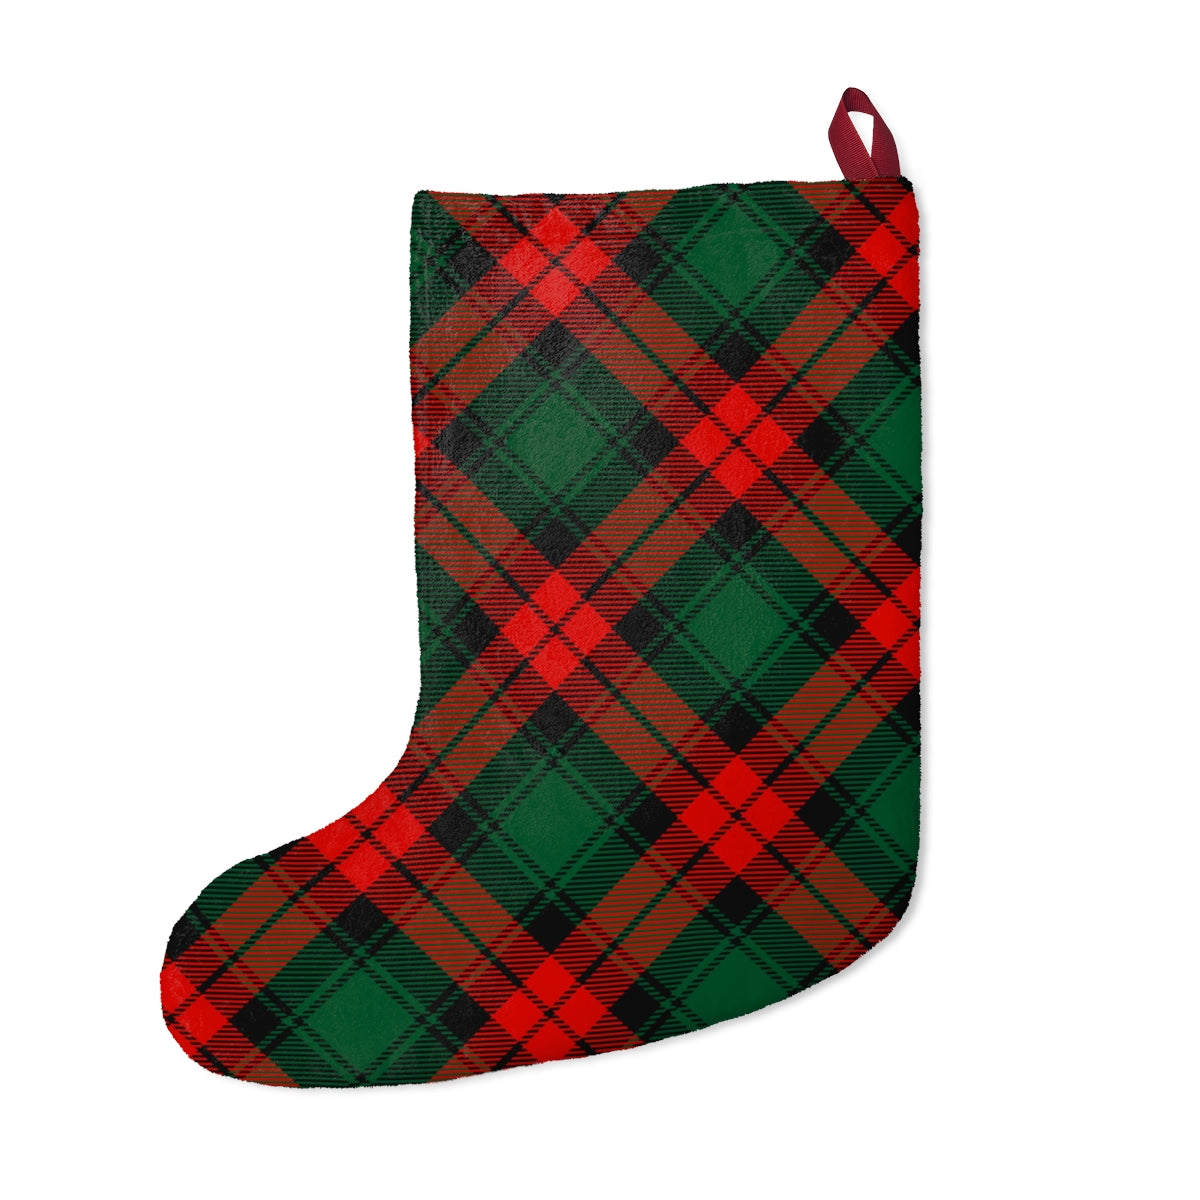 Red and Green Tartan Plaid Christmas Stockings